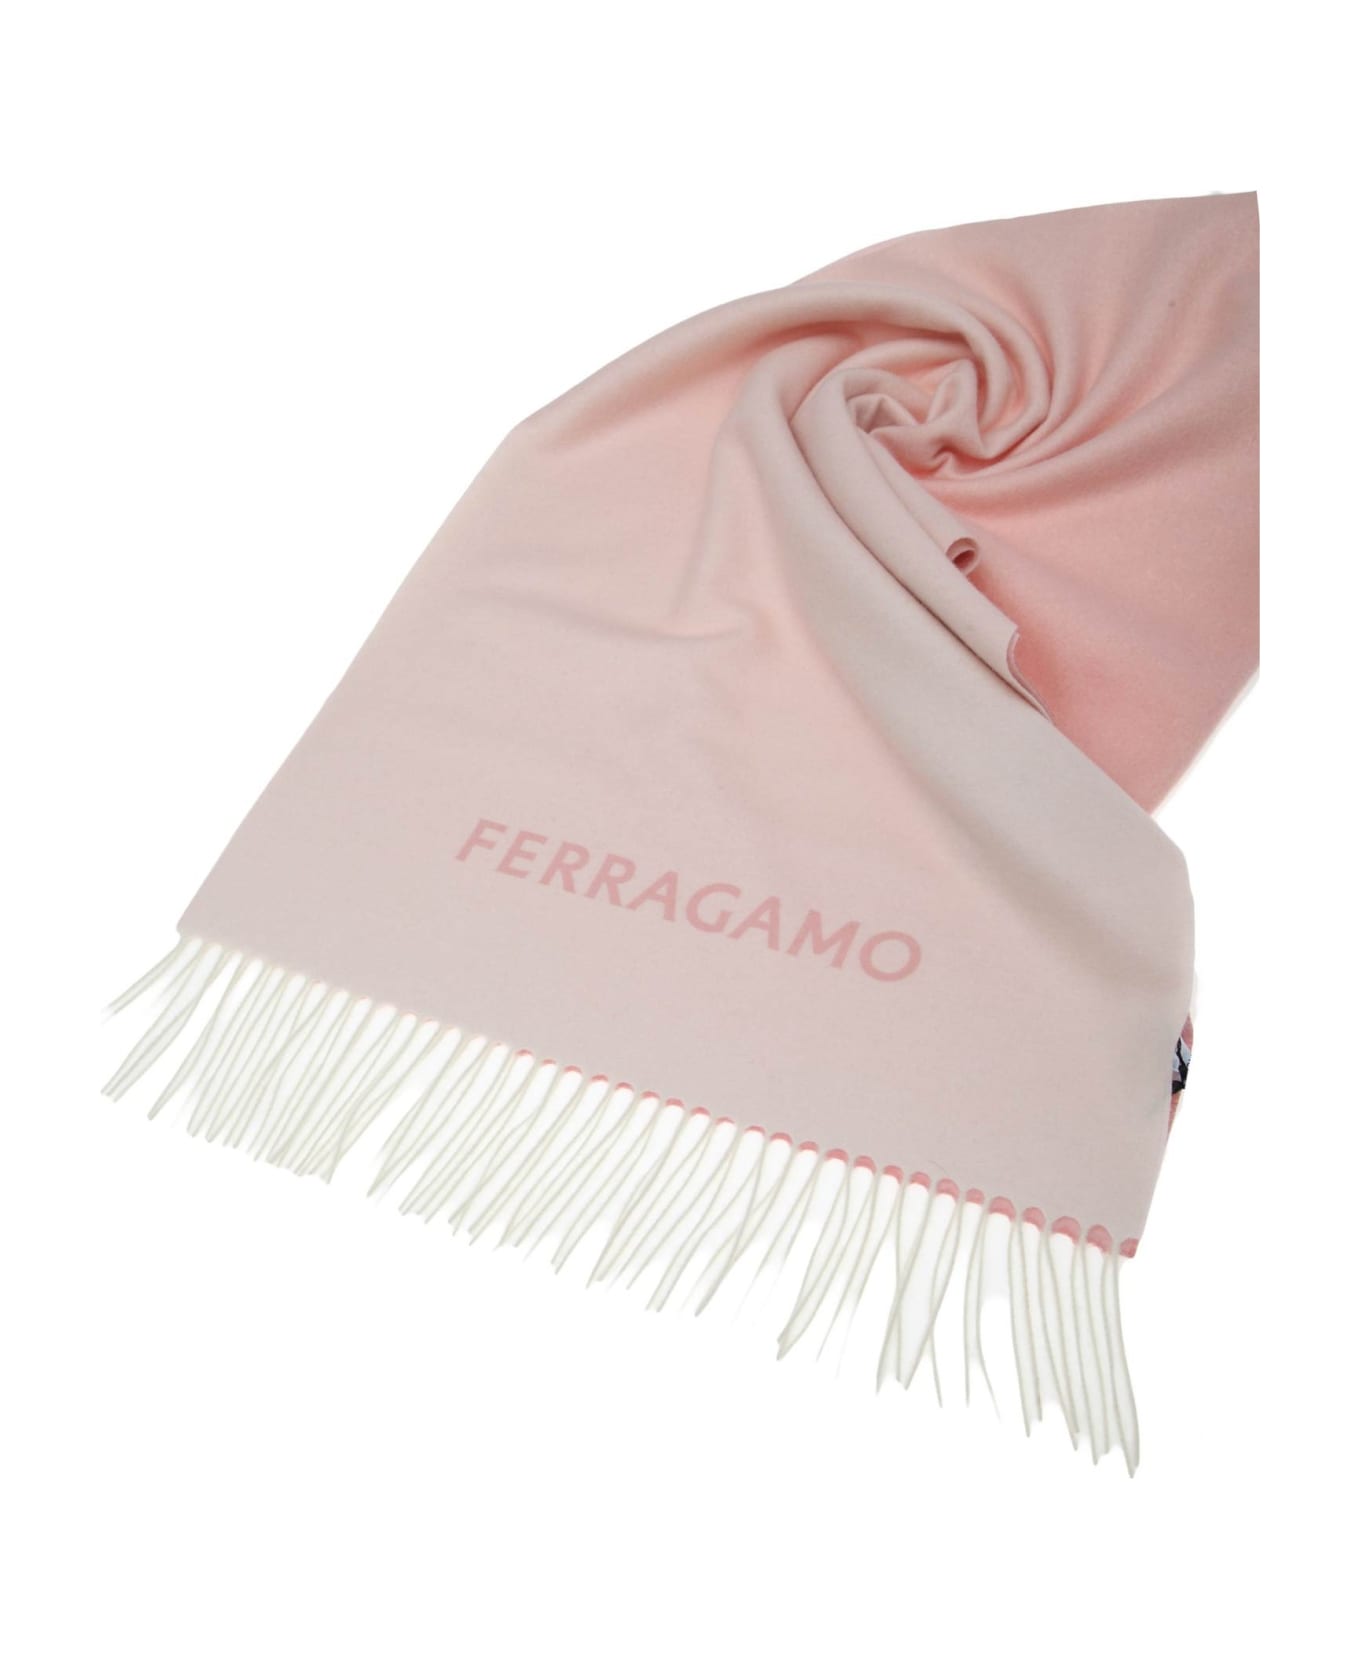 Ferragamo Scarf In Cashmere Nuance Shaded Effect - PINK/MASCARPONE